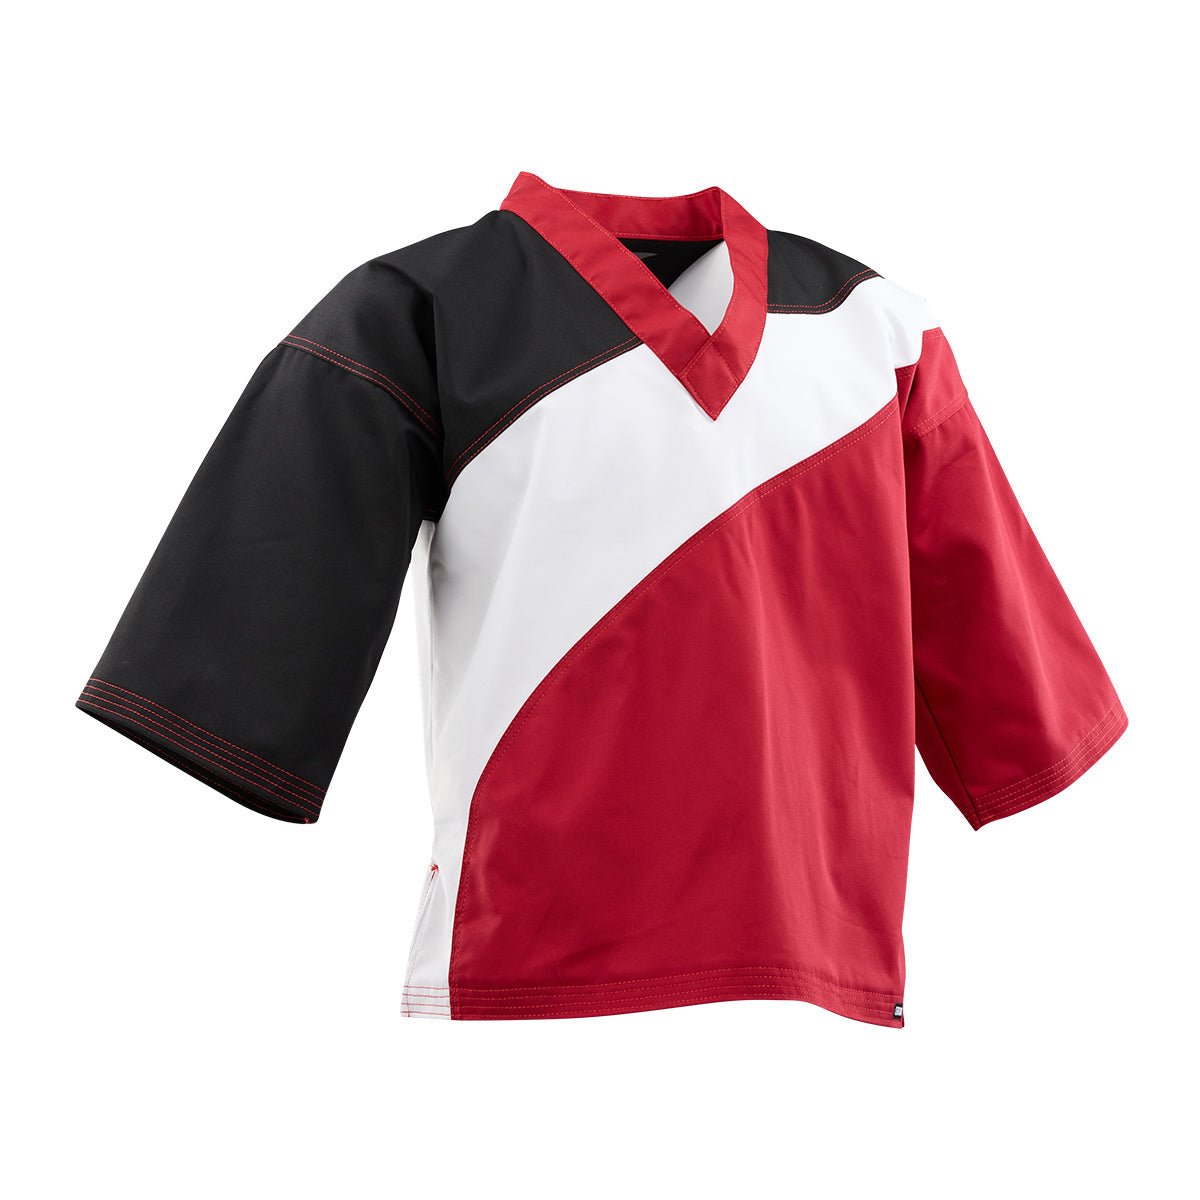 Tri-Color Diagonal Program Uniform Top Black/Red/White